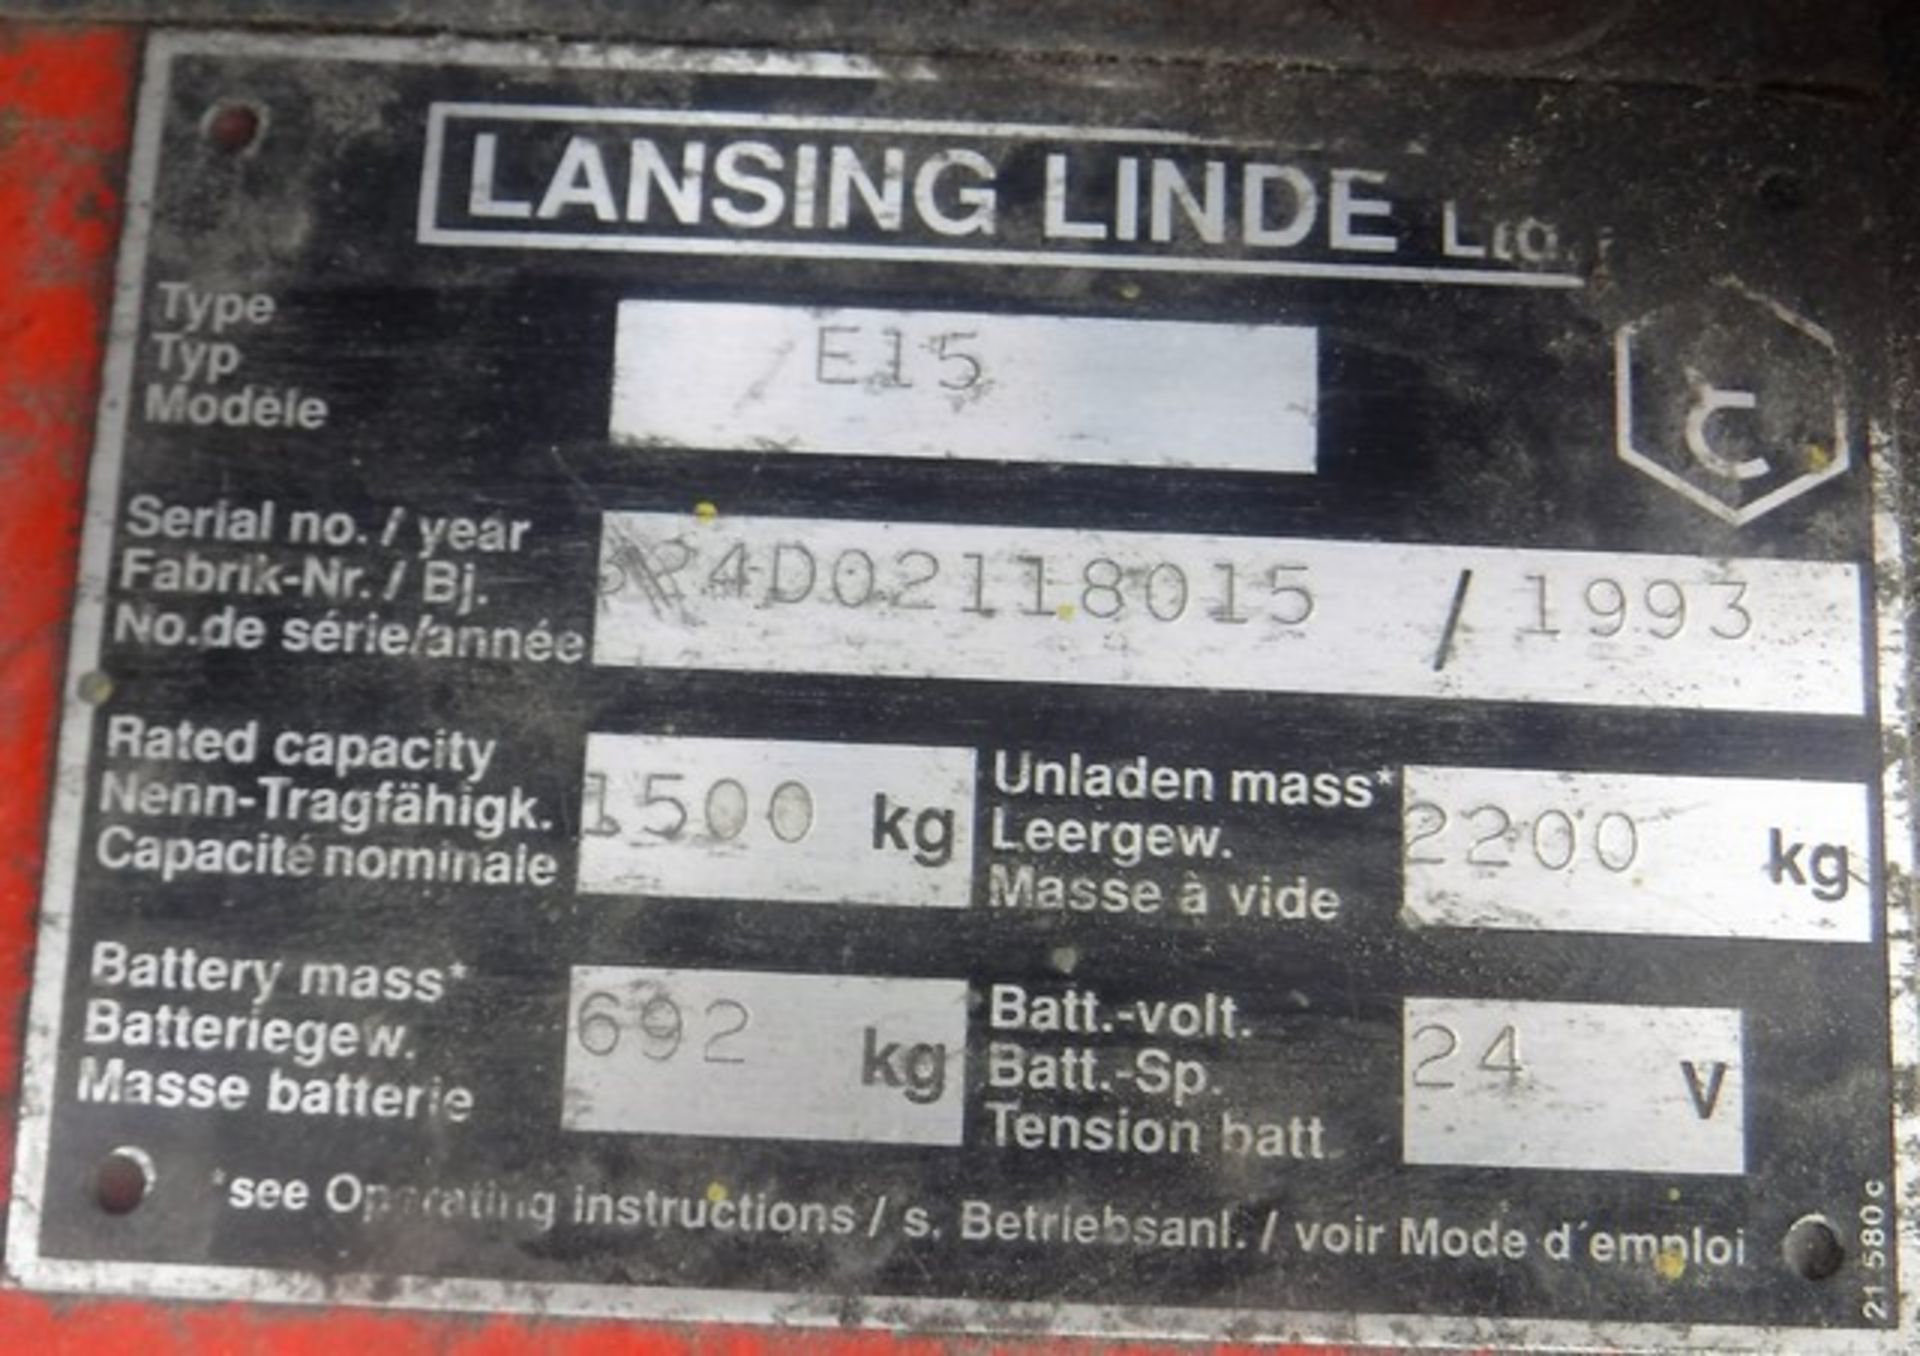 1993 LANSING LINDE E15 1.5 electric forklift (24v). S/N 324D02118015. 455hrs (not verified). C/W chl - Image 2 of 15